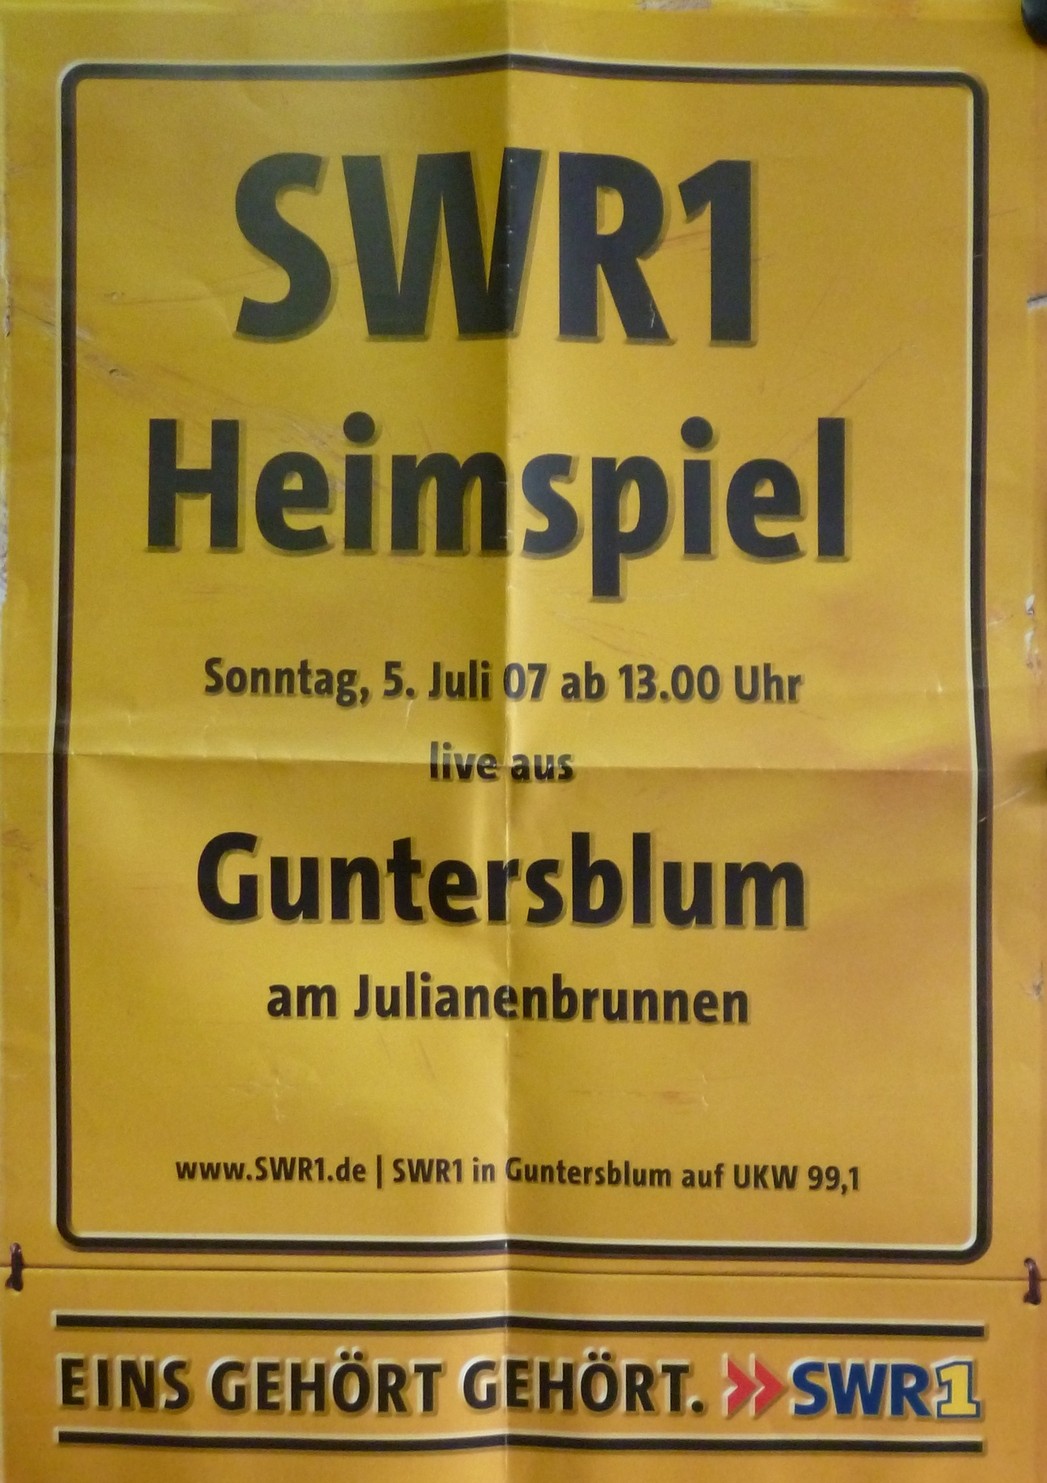 SWR 1 Heimspiel (Kulturverein Guntersblum CC BY-NC-SA)